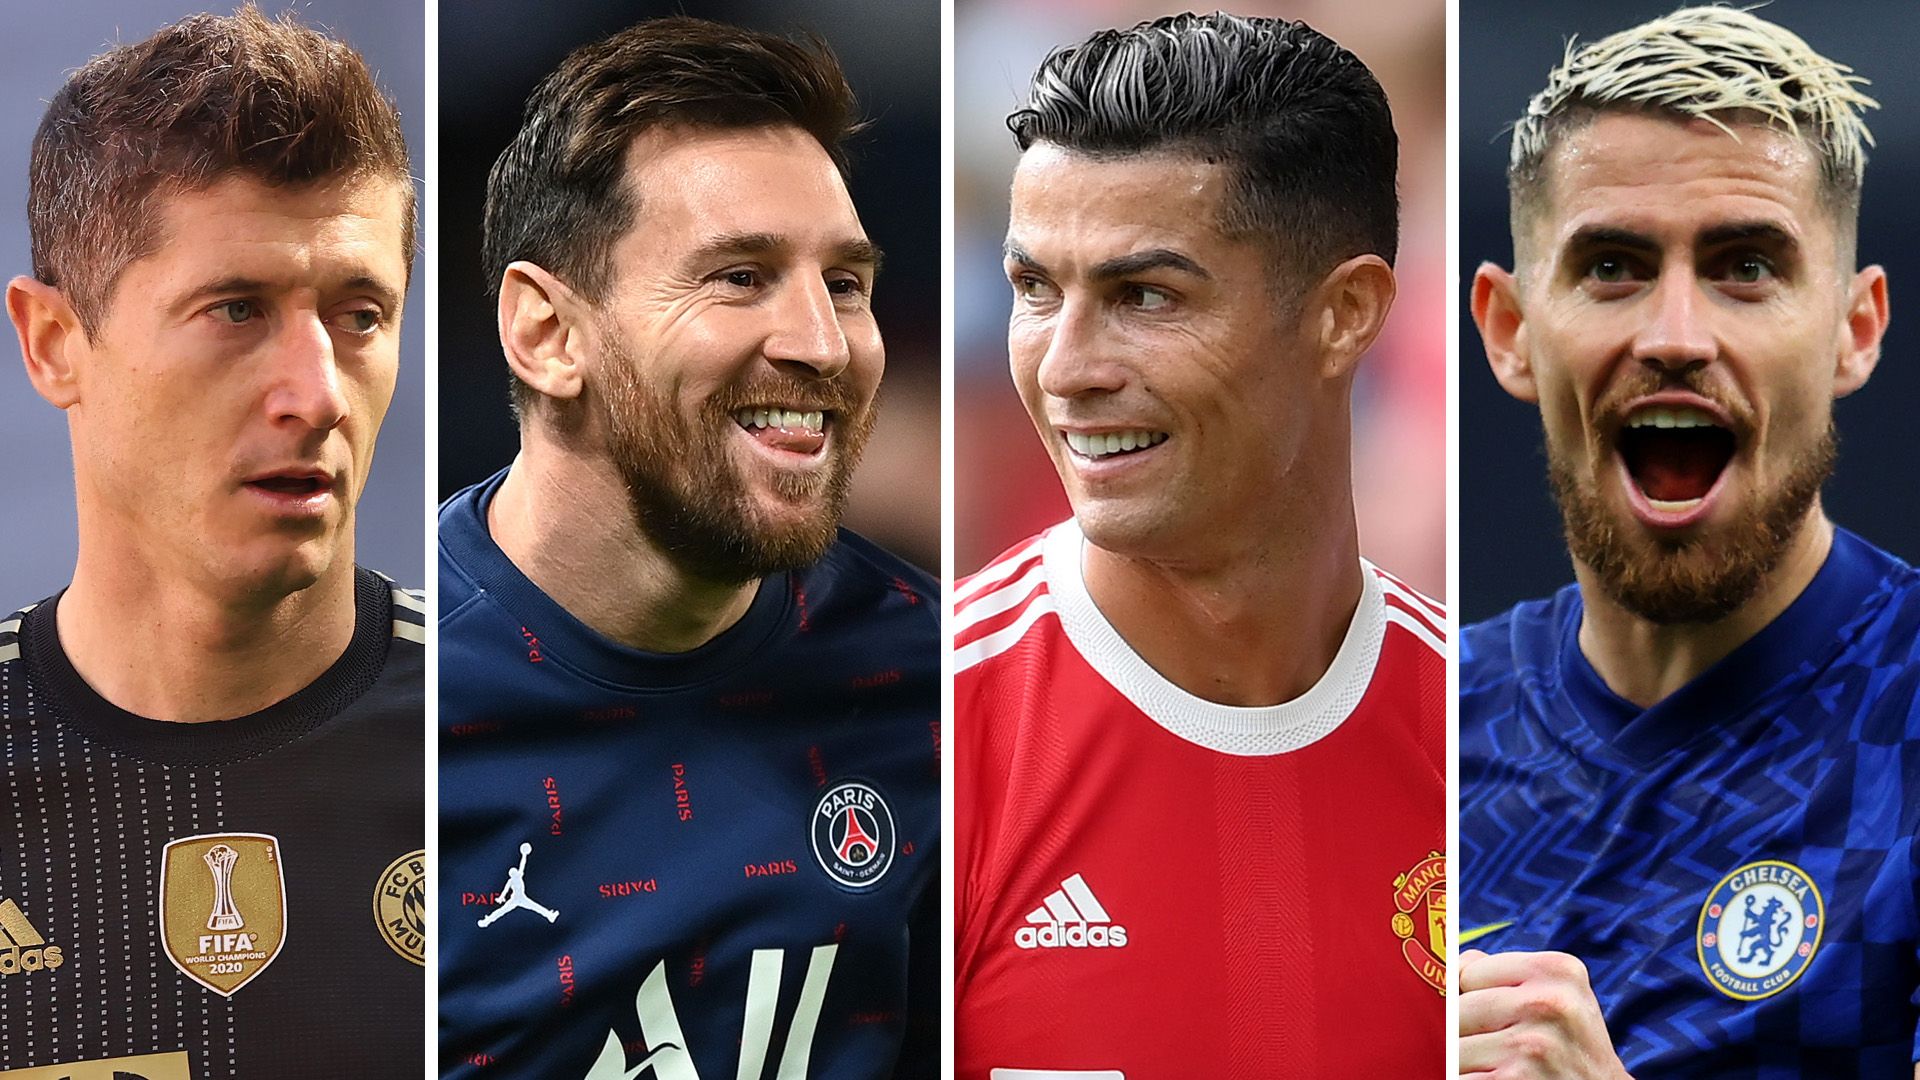 Ballon d'Or 2021 nominees: Messi, Ronaldo, and Lewandowski  in contention for prestigious award